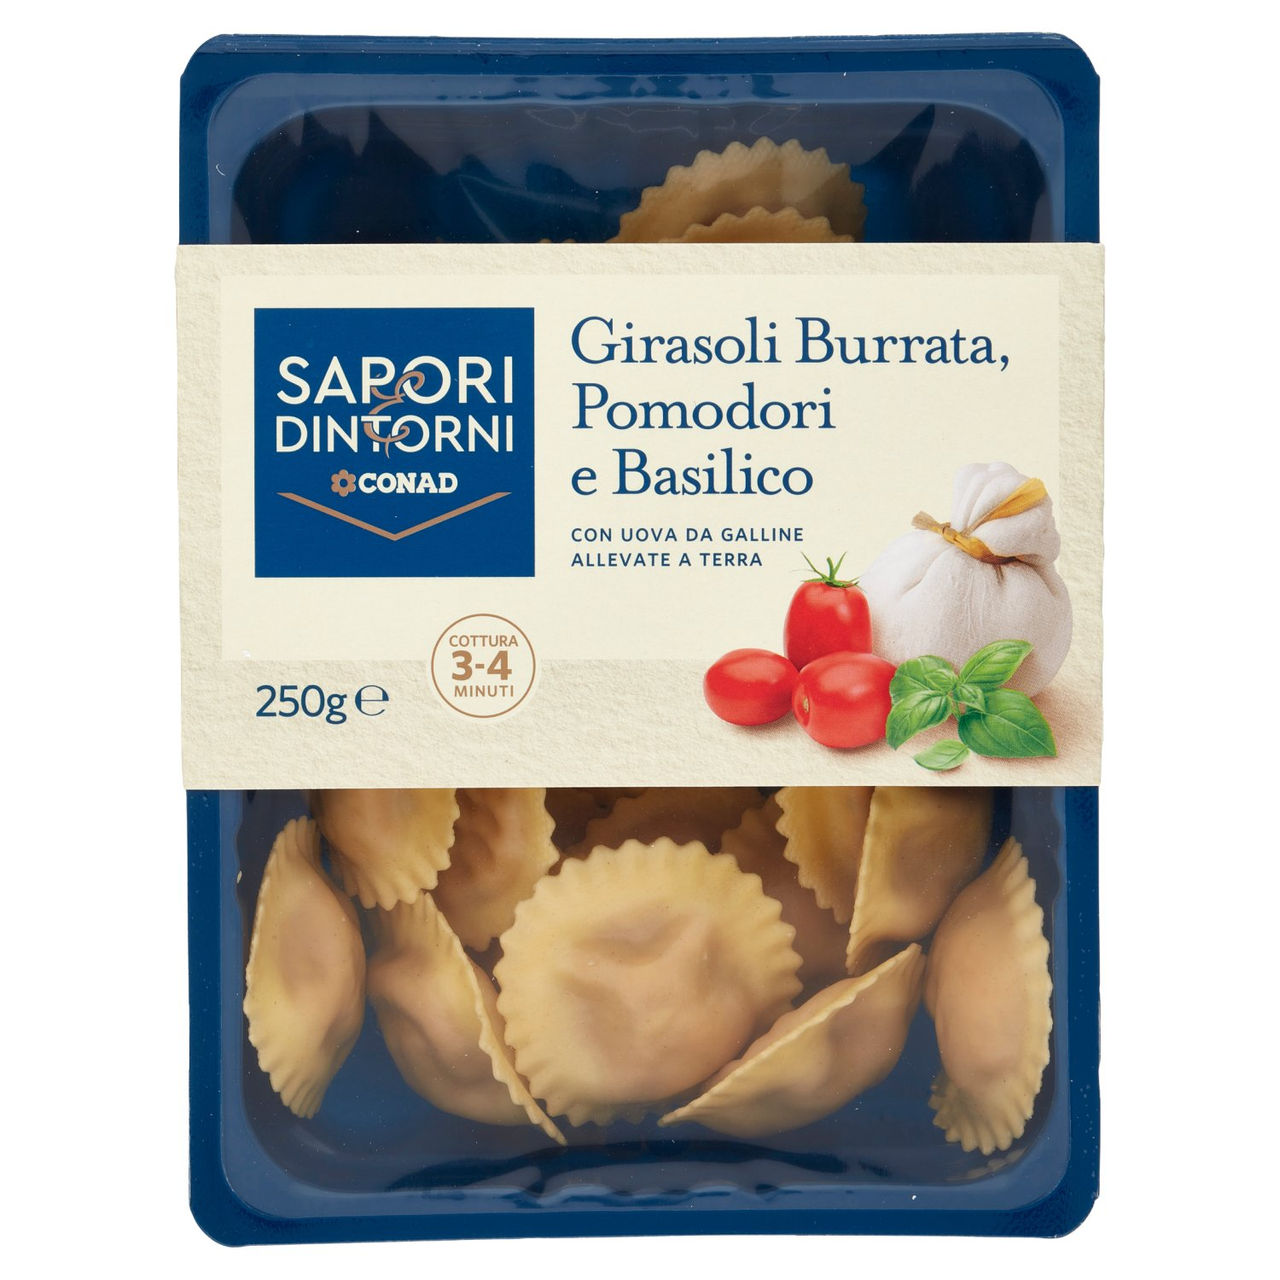 Girasoli Burrata Pomodori Conad in vendita online